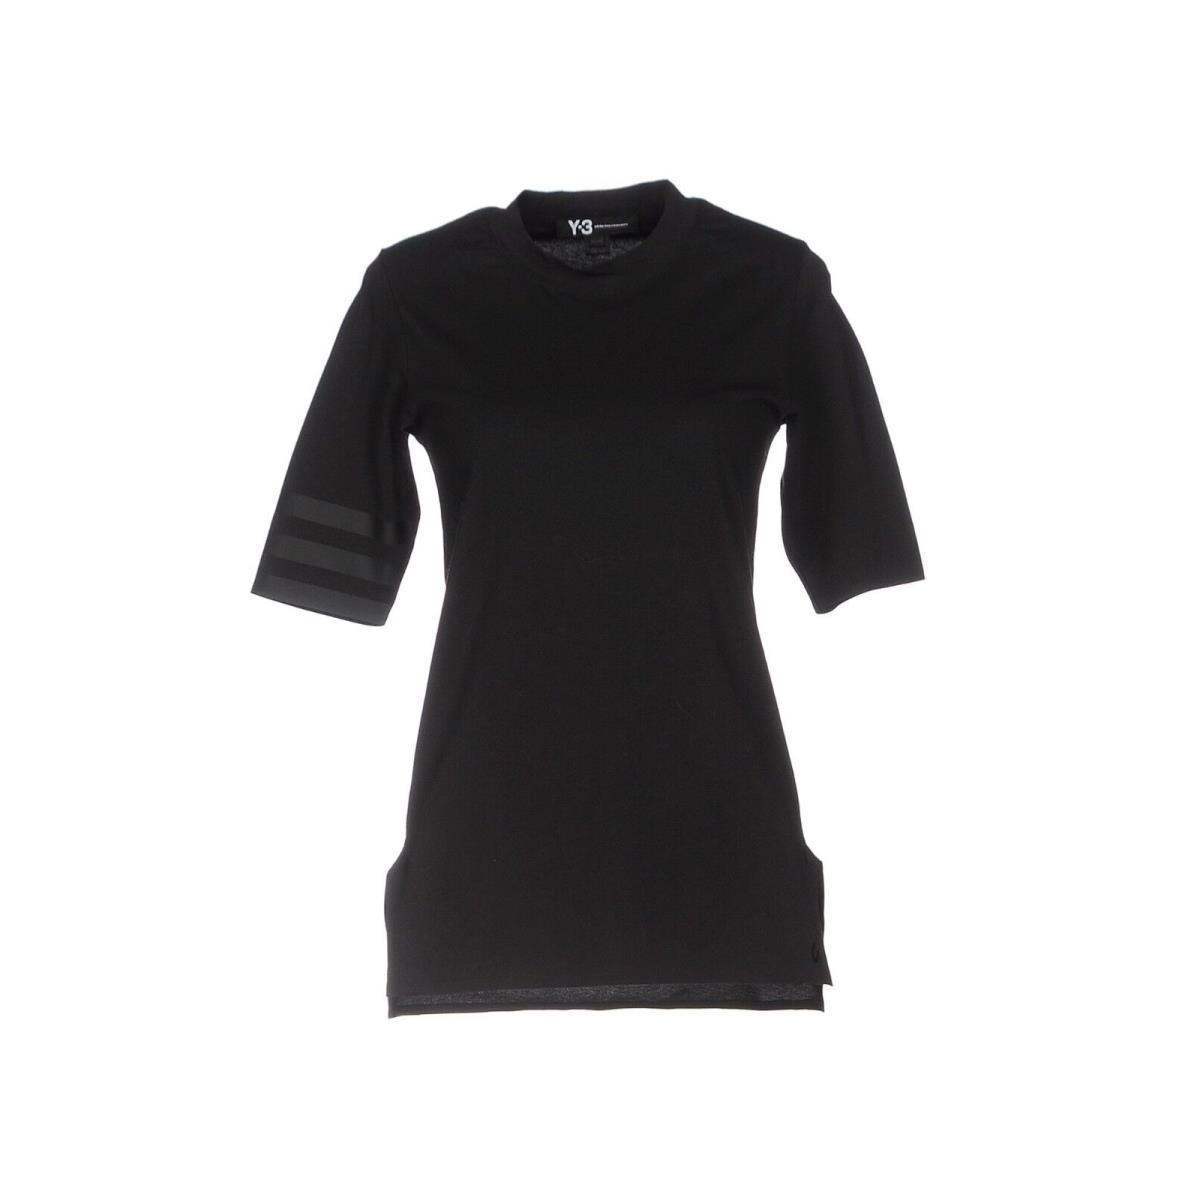 Adidas Y-3 by Yohji Yamamoto Women`s Black Jersey T-shirt Top 97% Cotton Size S